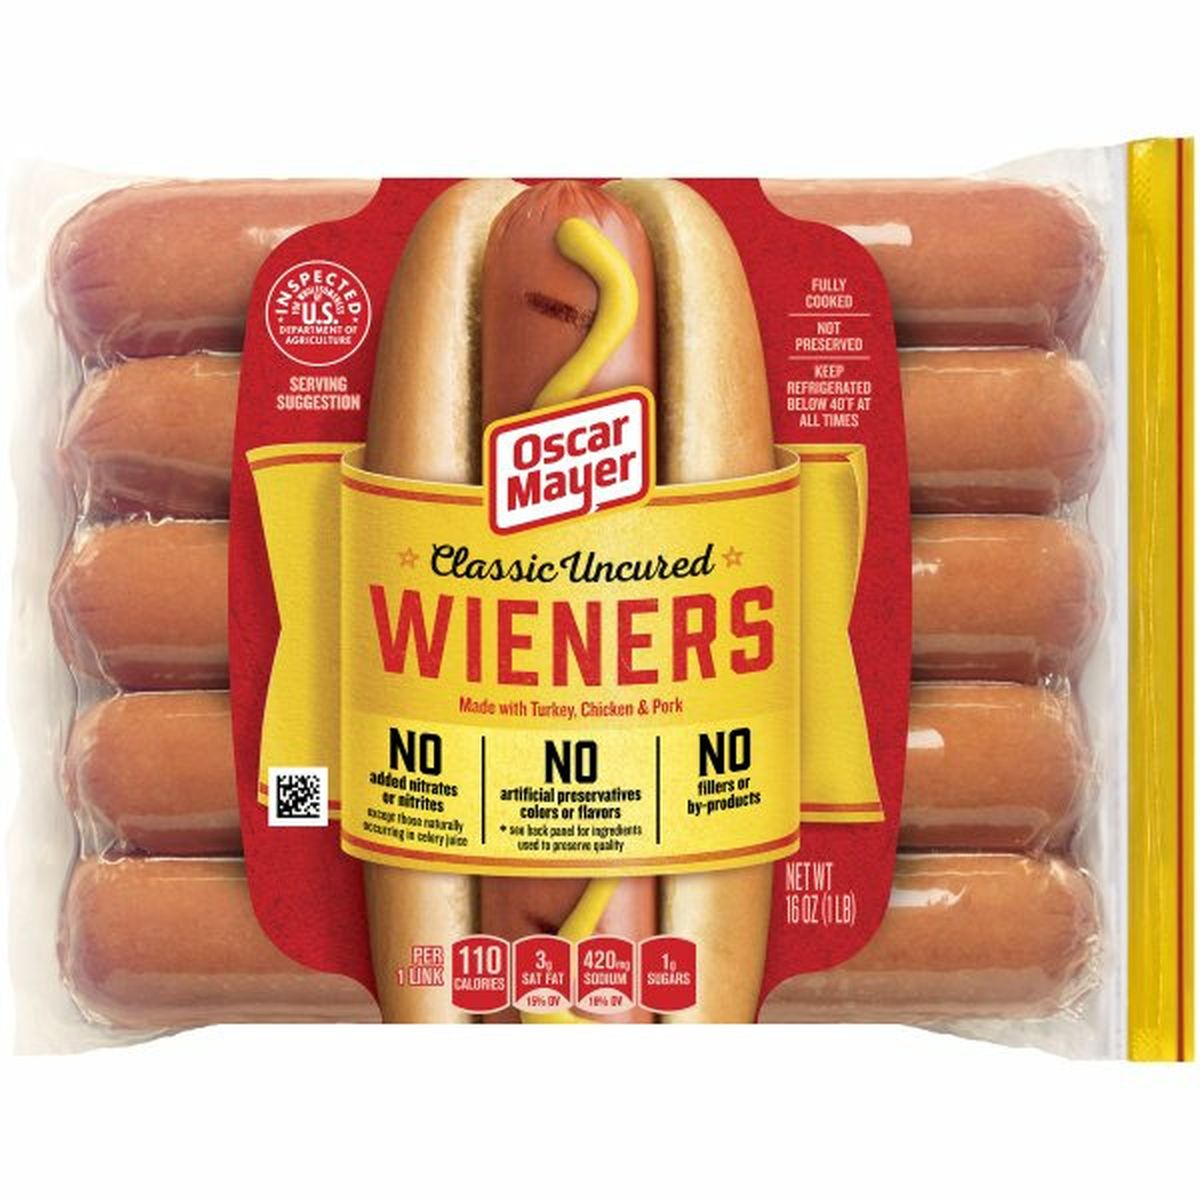 Calories in Oscar Mayer Classic Uncured Wieners